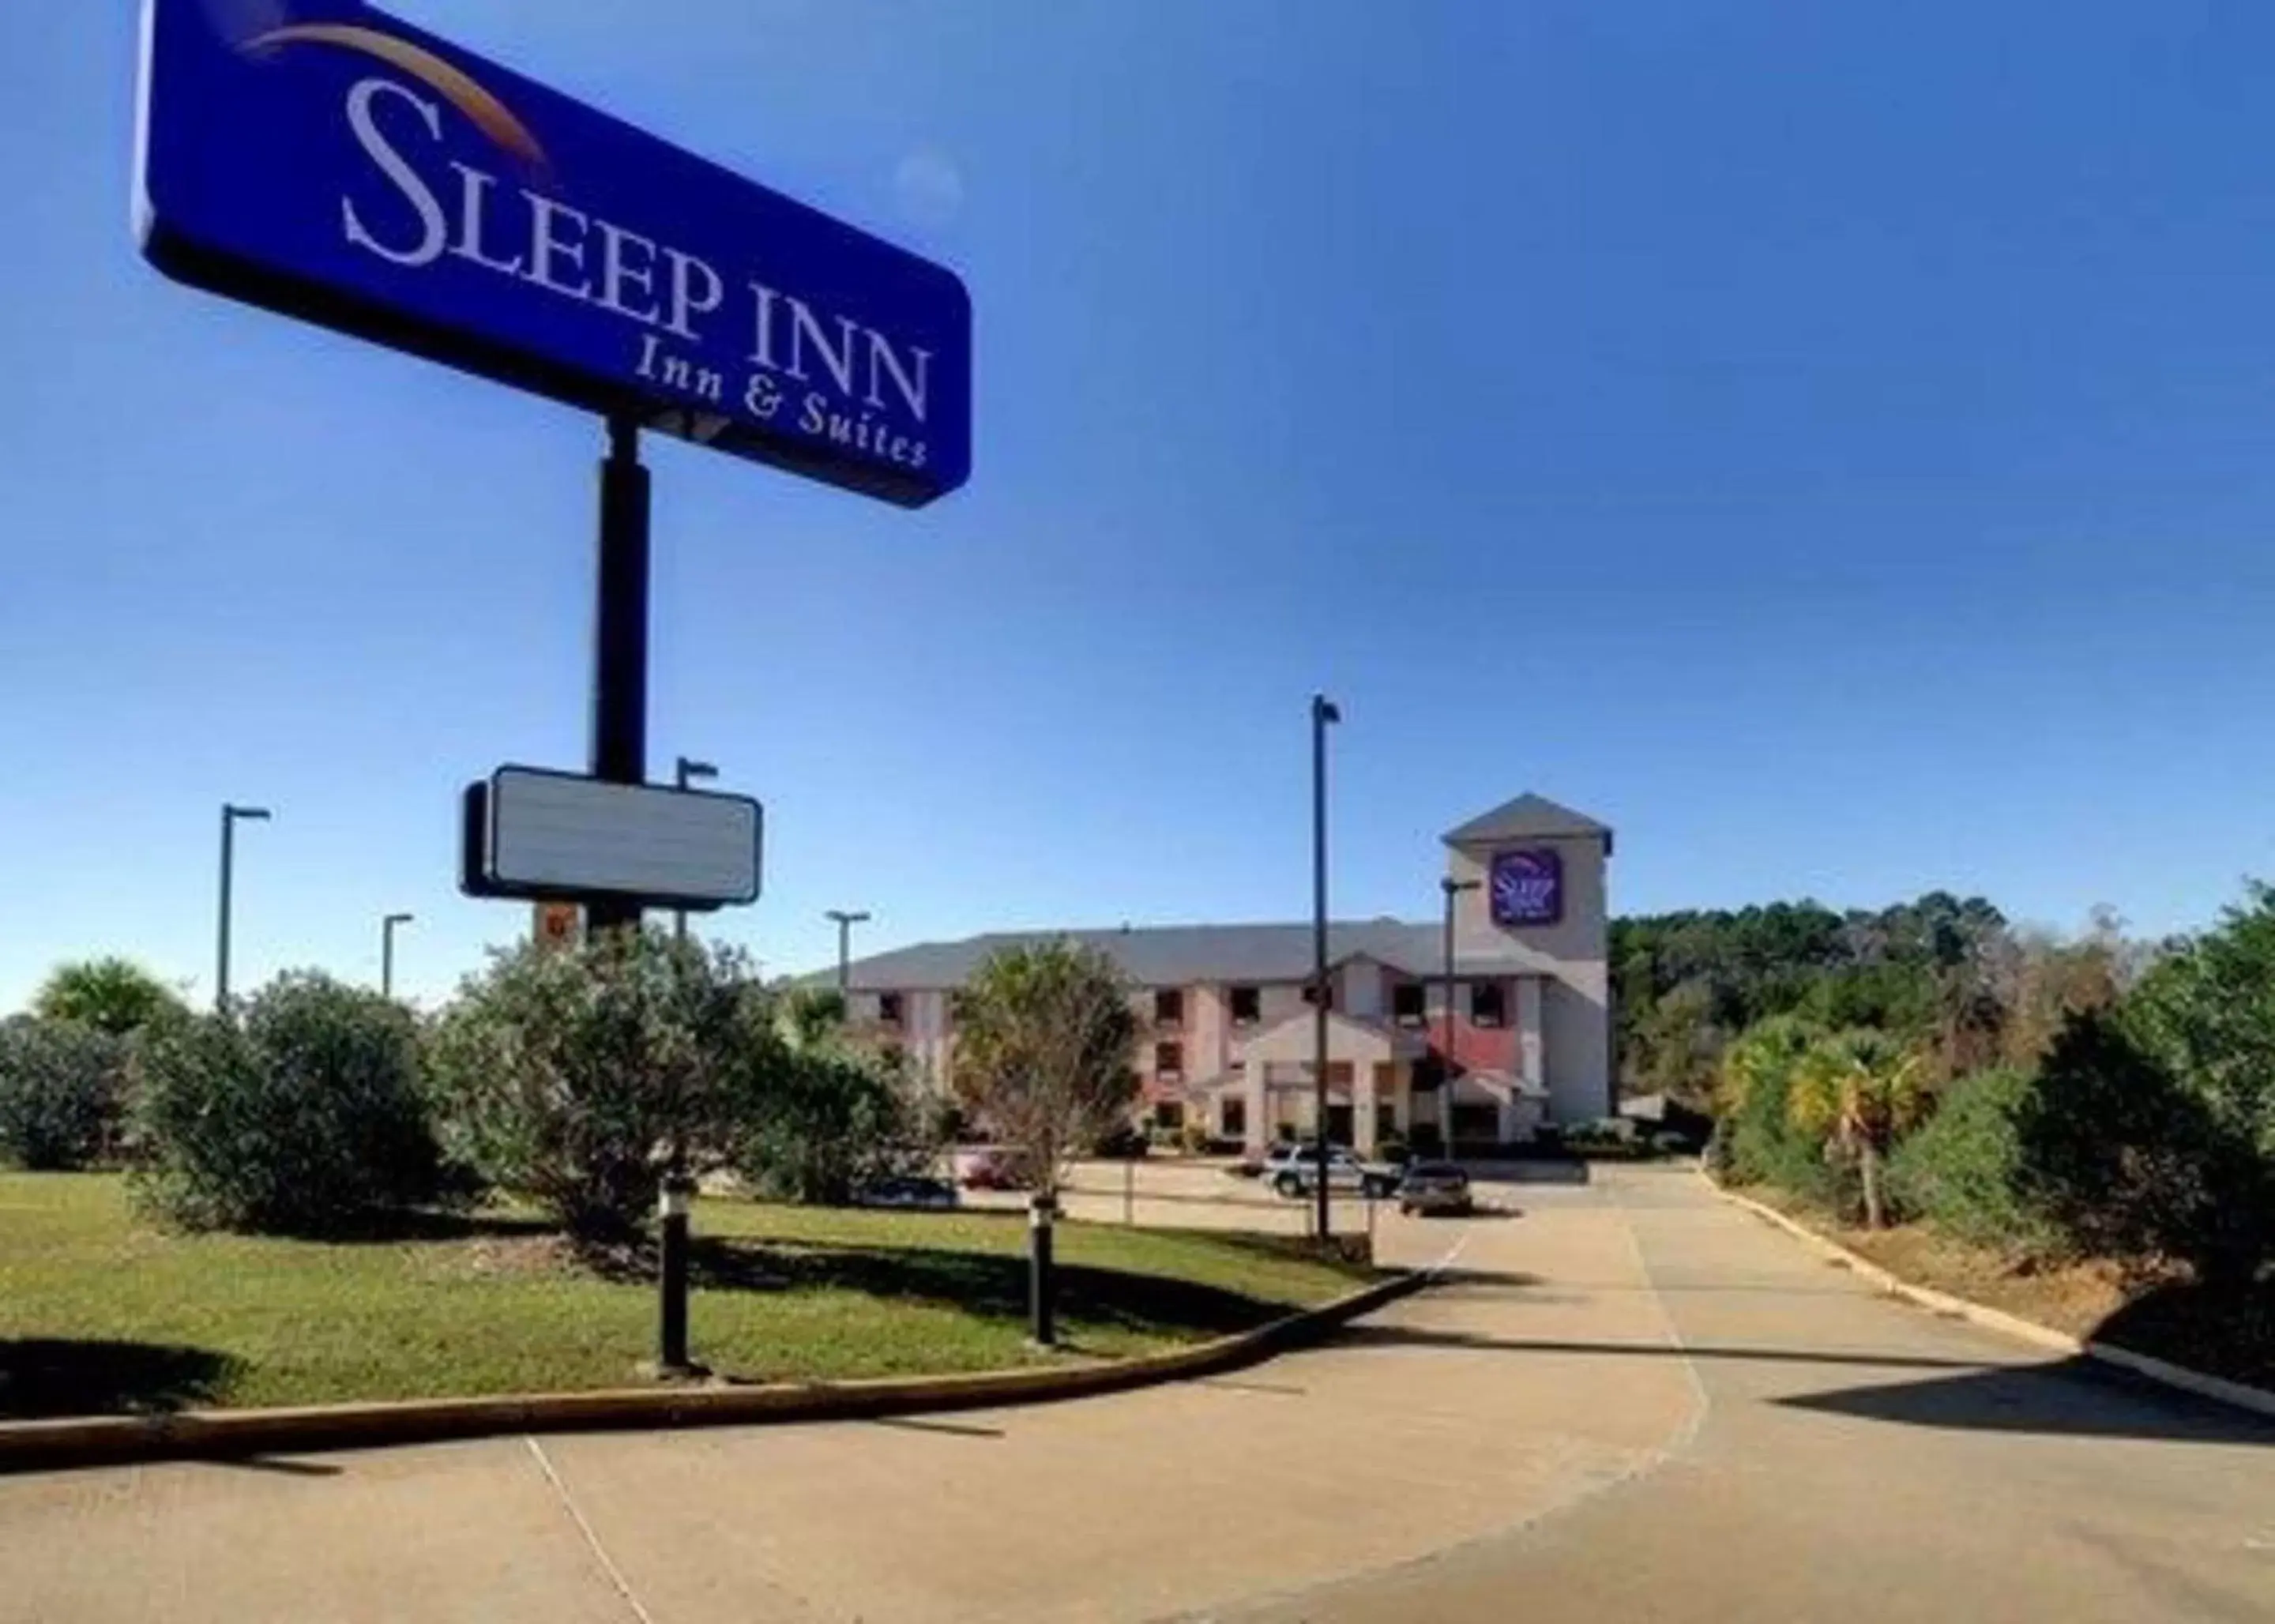 Property building in Sleep Inn & Suites Pineville - Alexandria